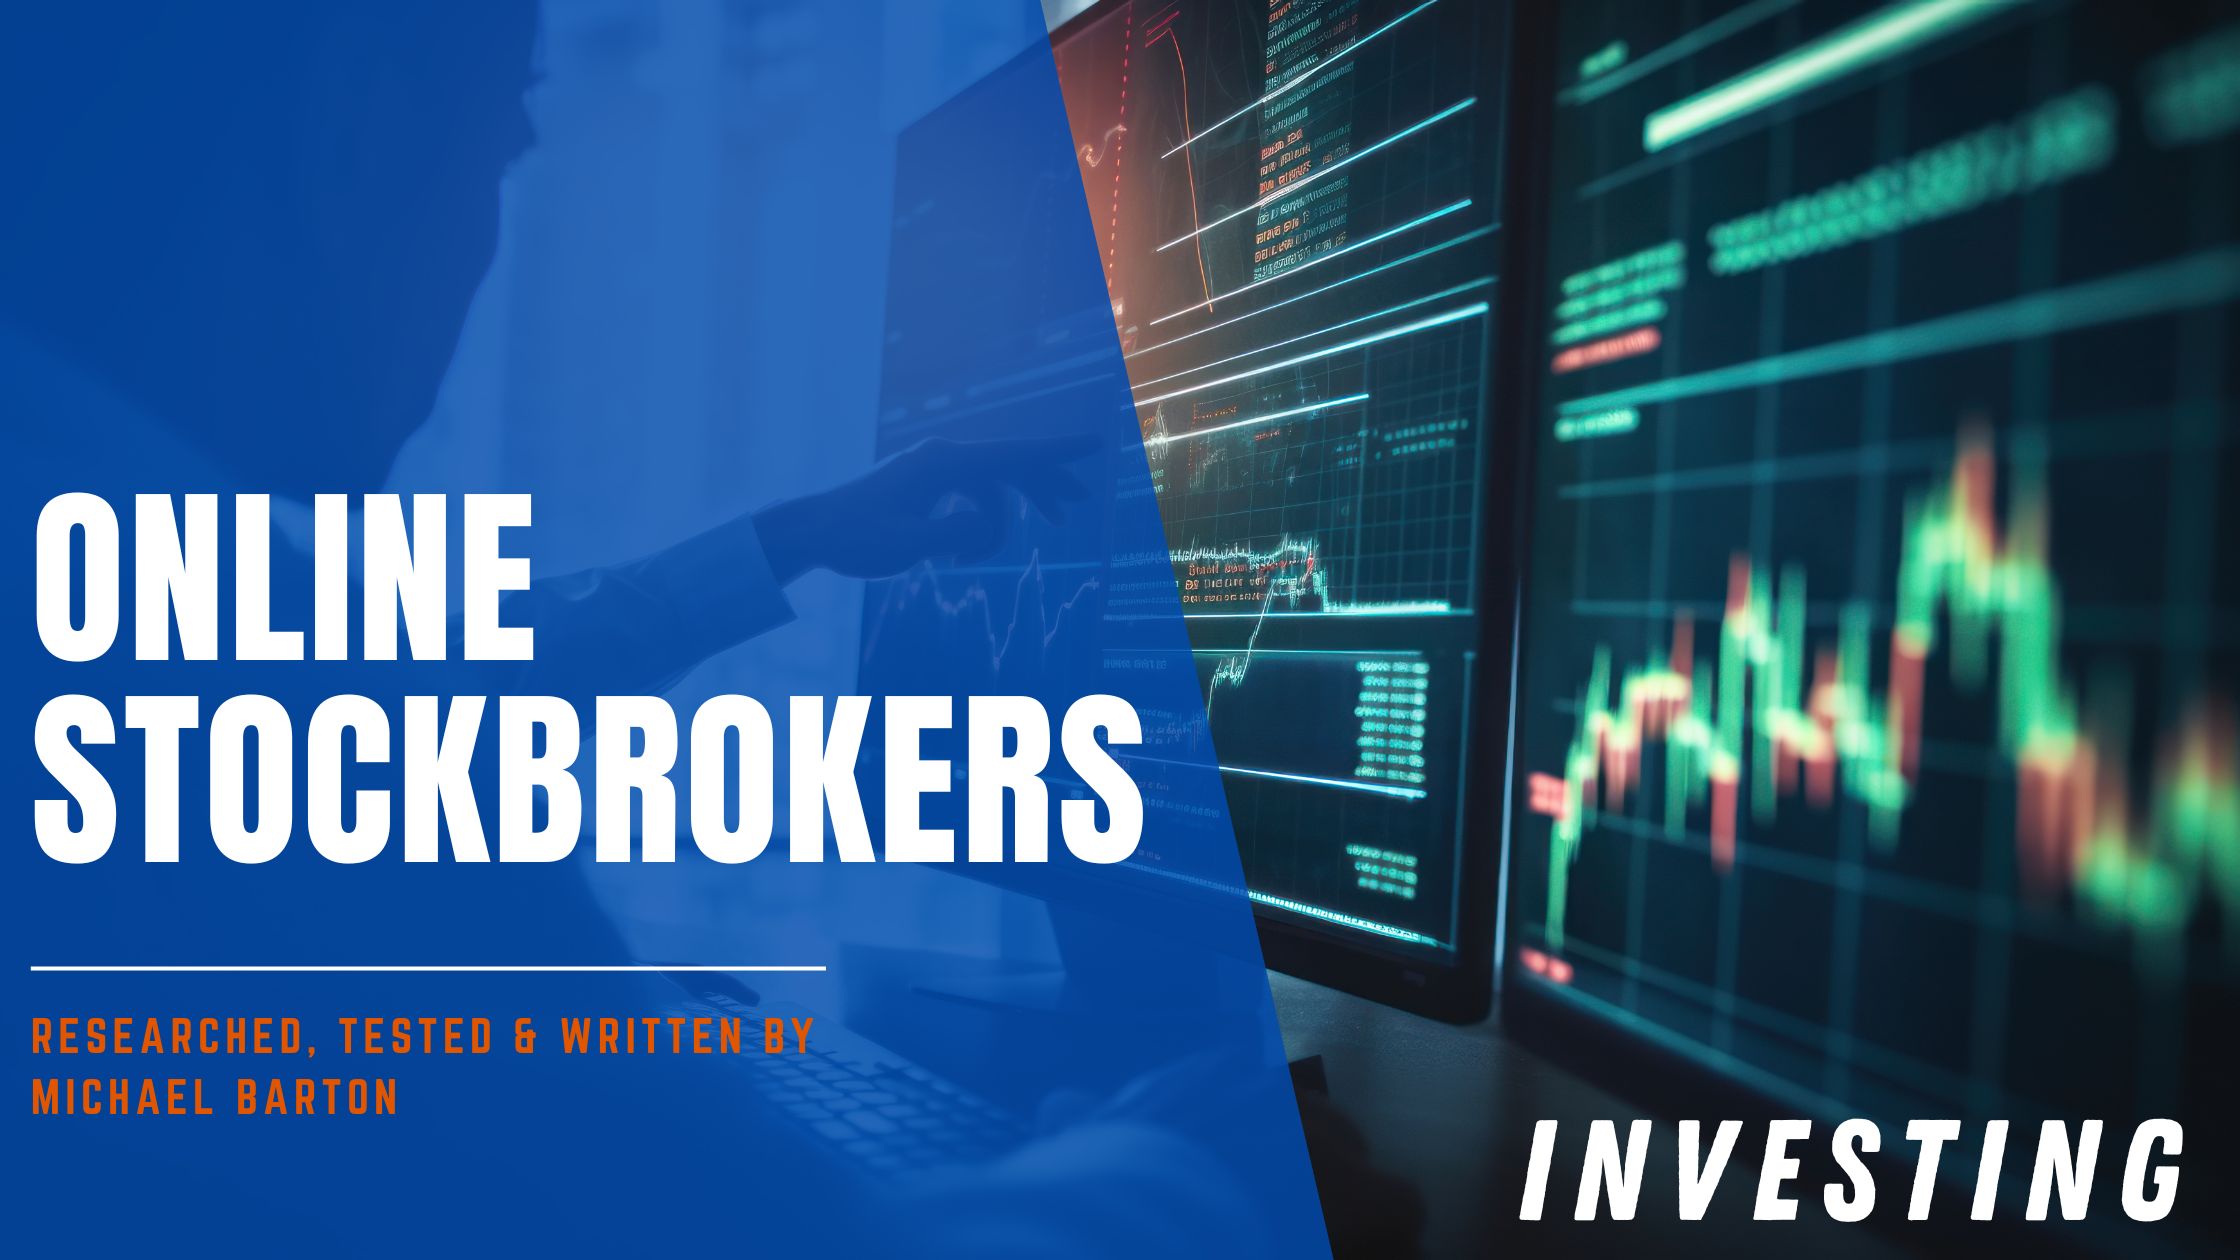 Online Stockbrokers featured image